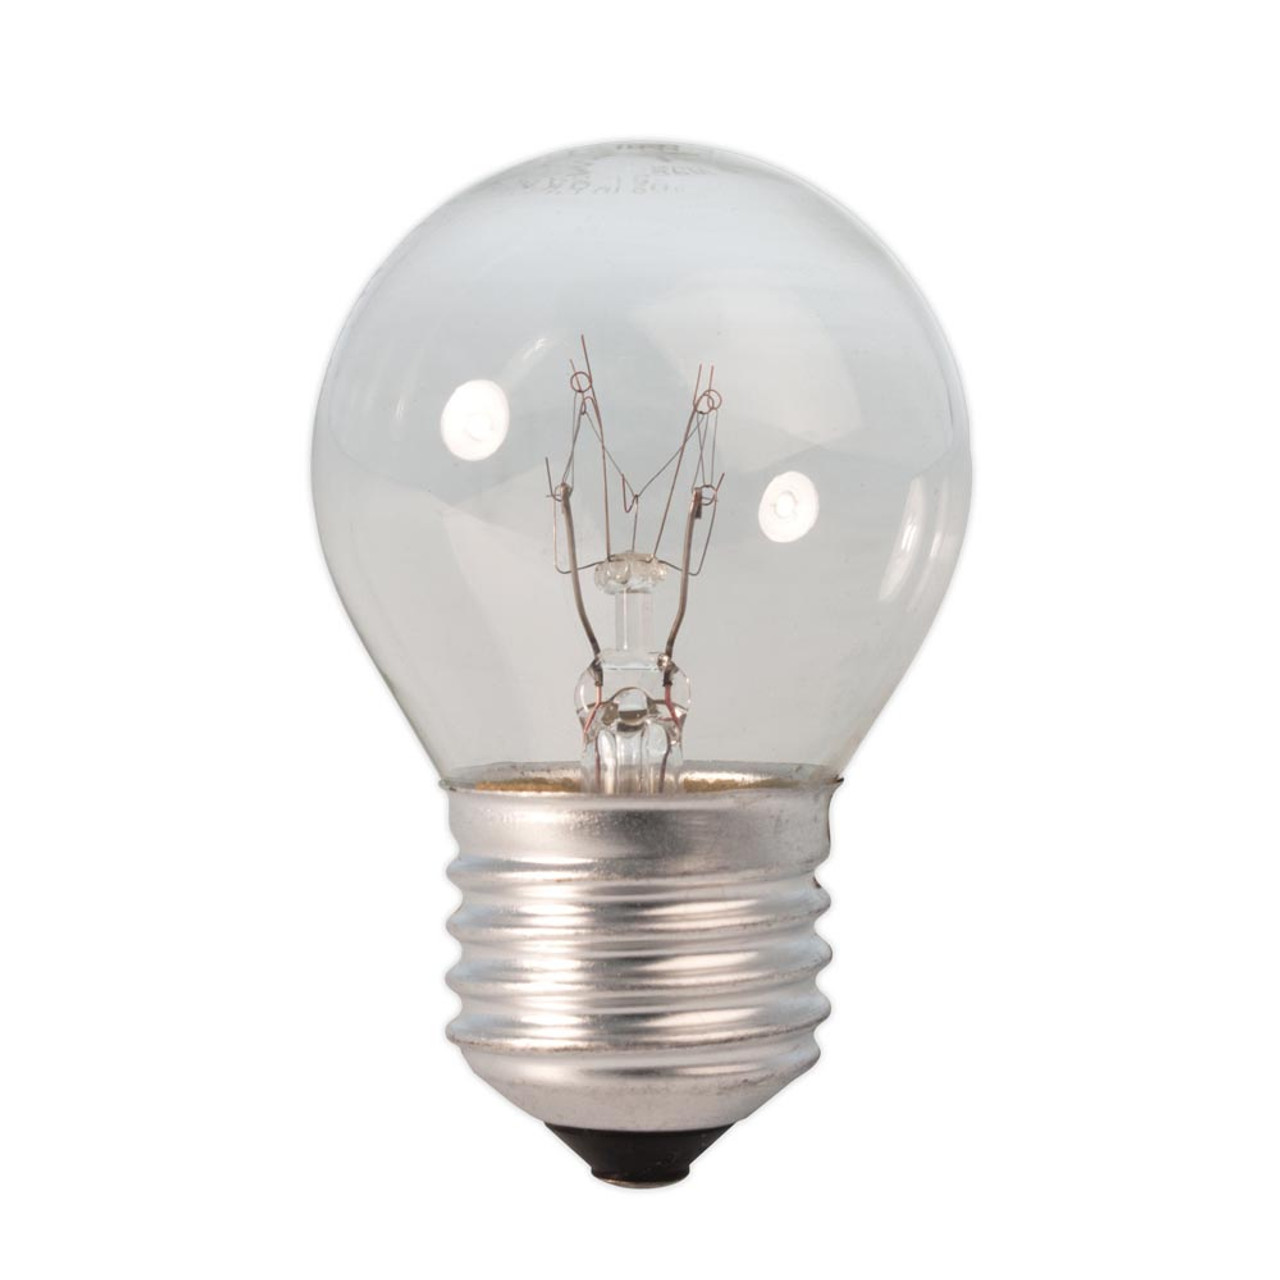 Calex Ball lamp 240V 10W 55lm E27 Clear